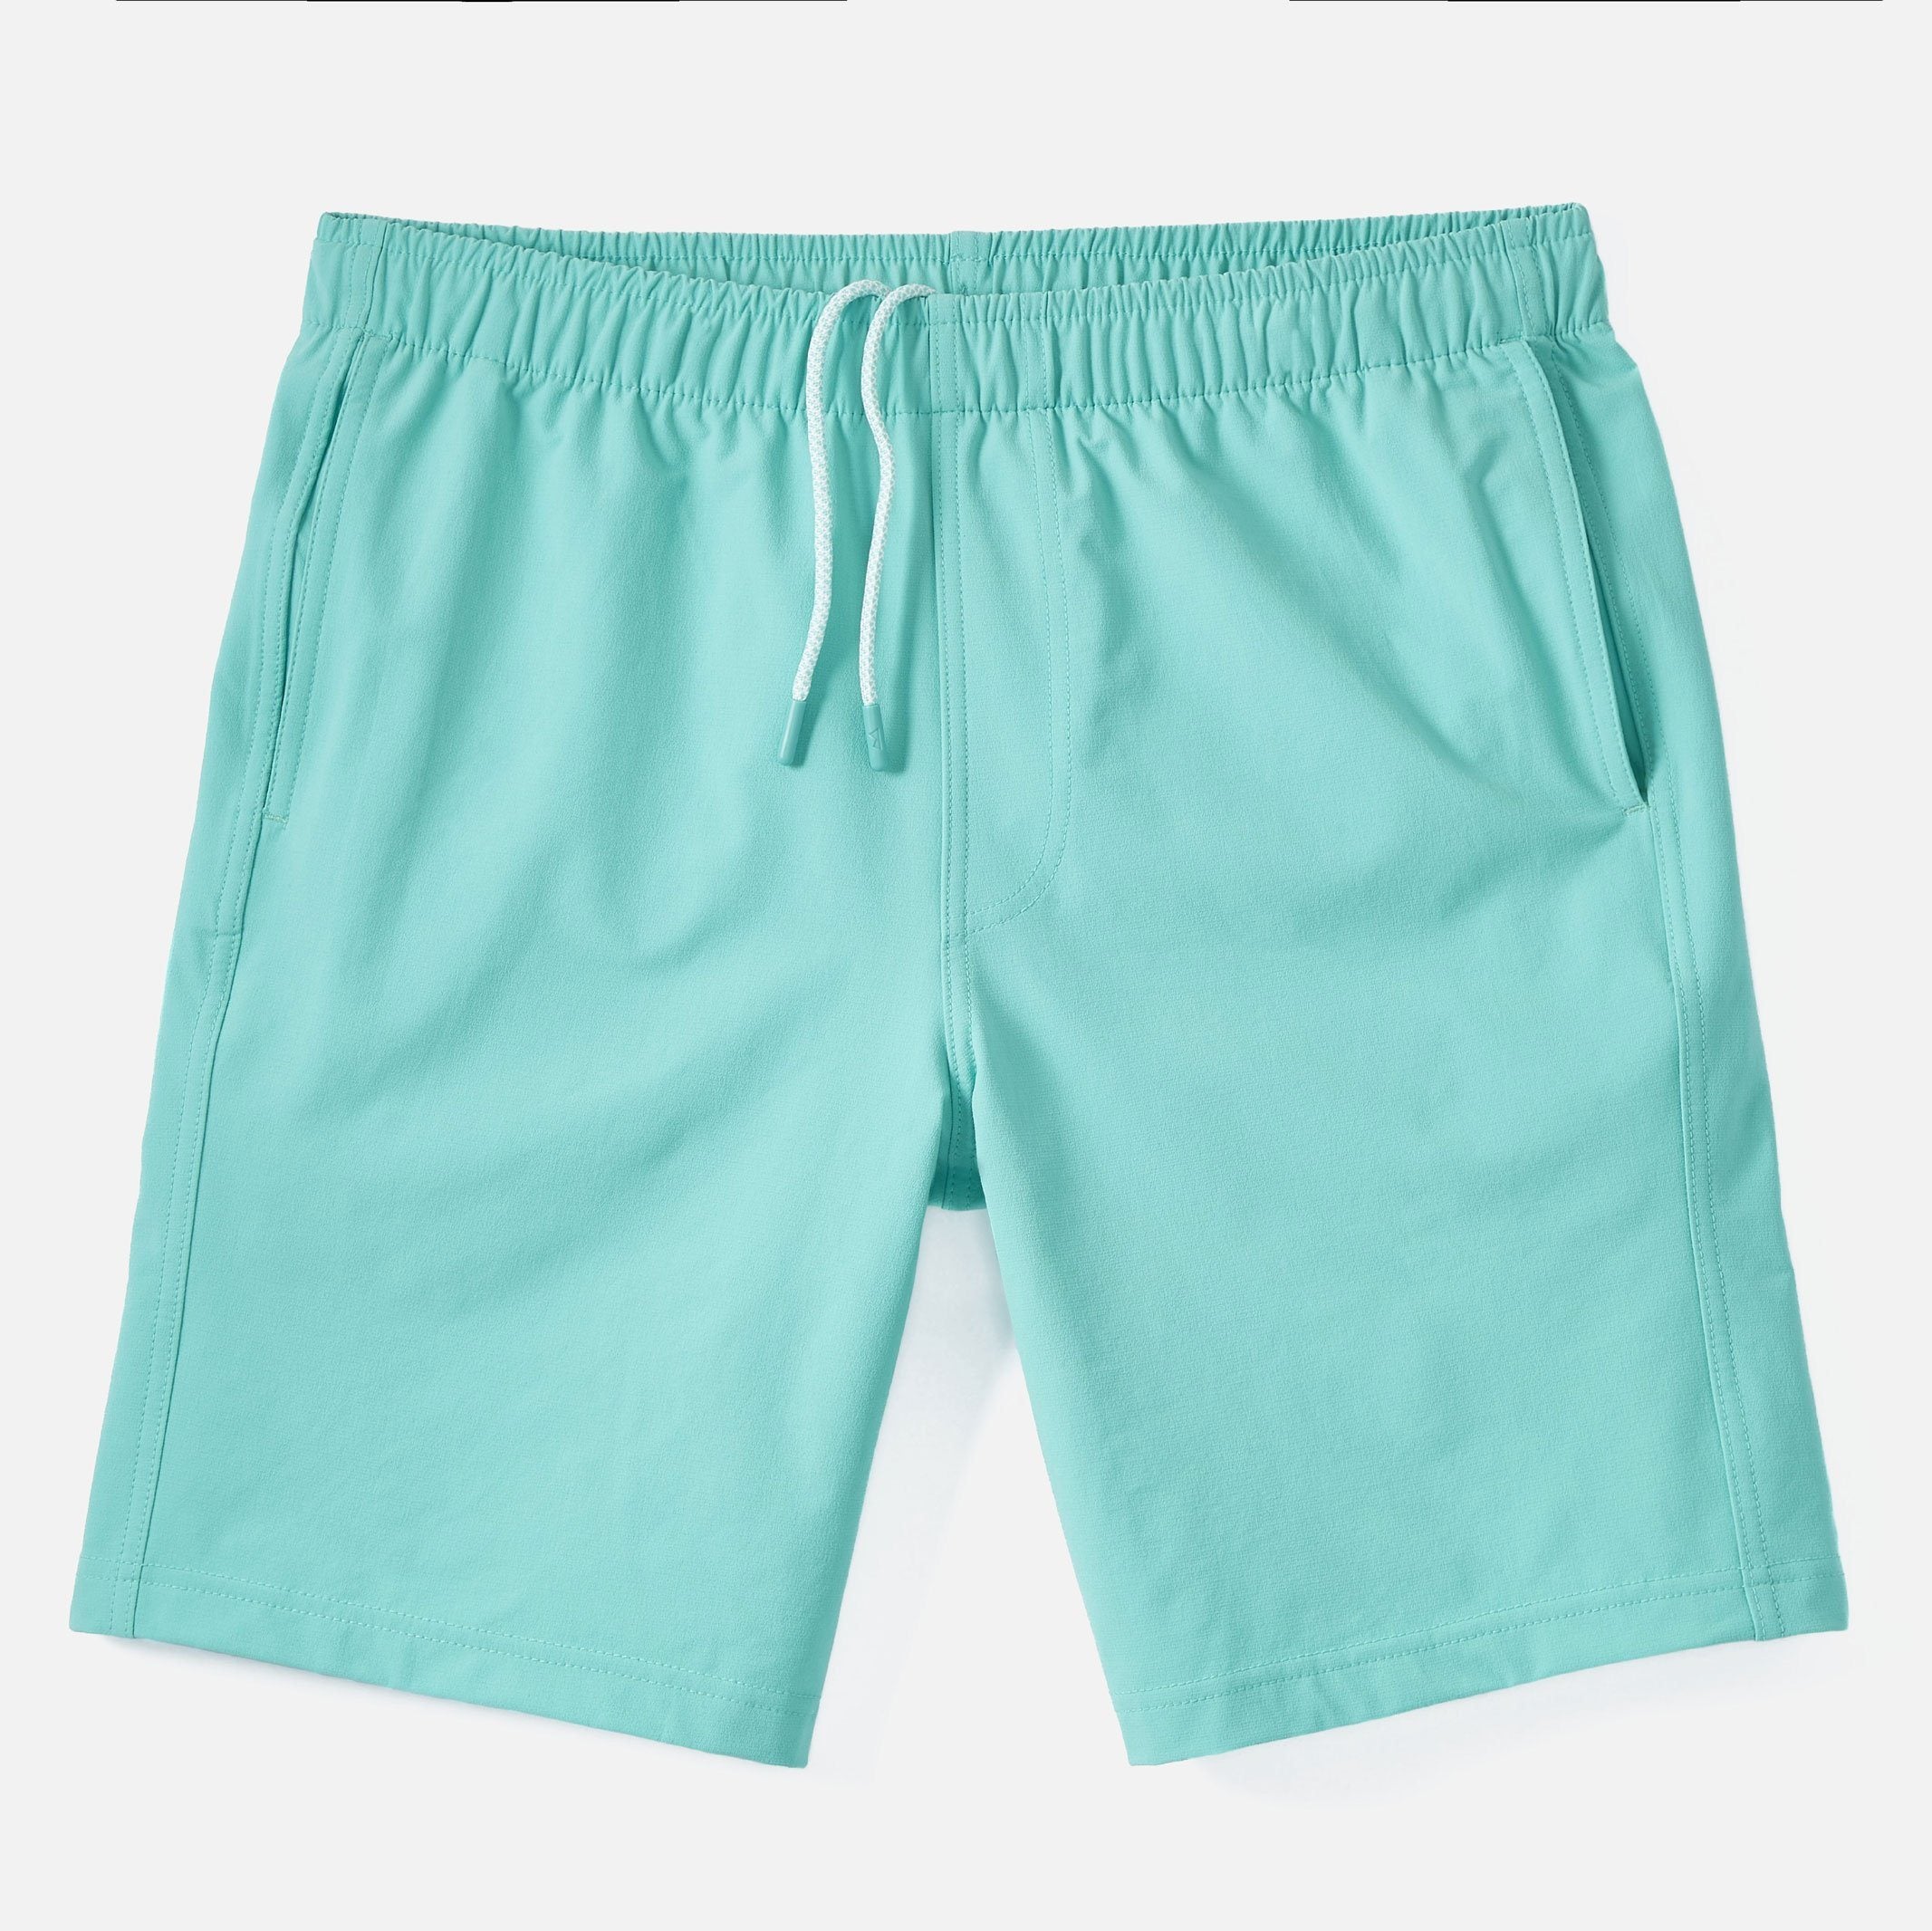 Men's Pants & Shorts  Great Fit, Exceptional Quality – Ledbury